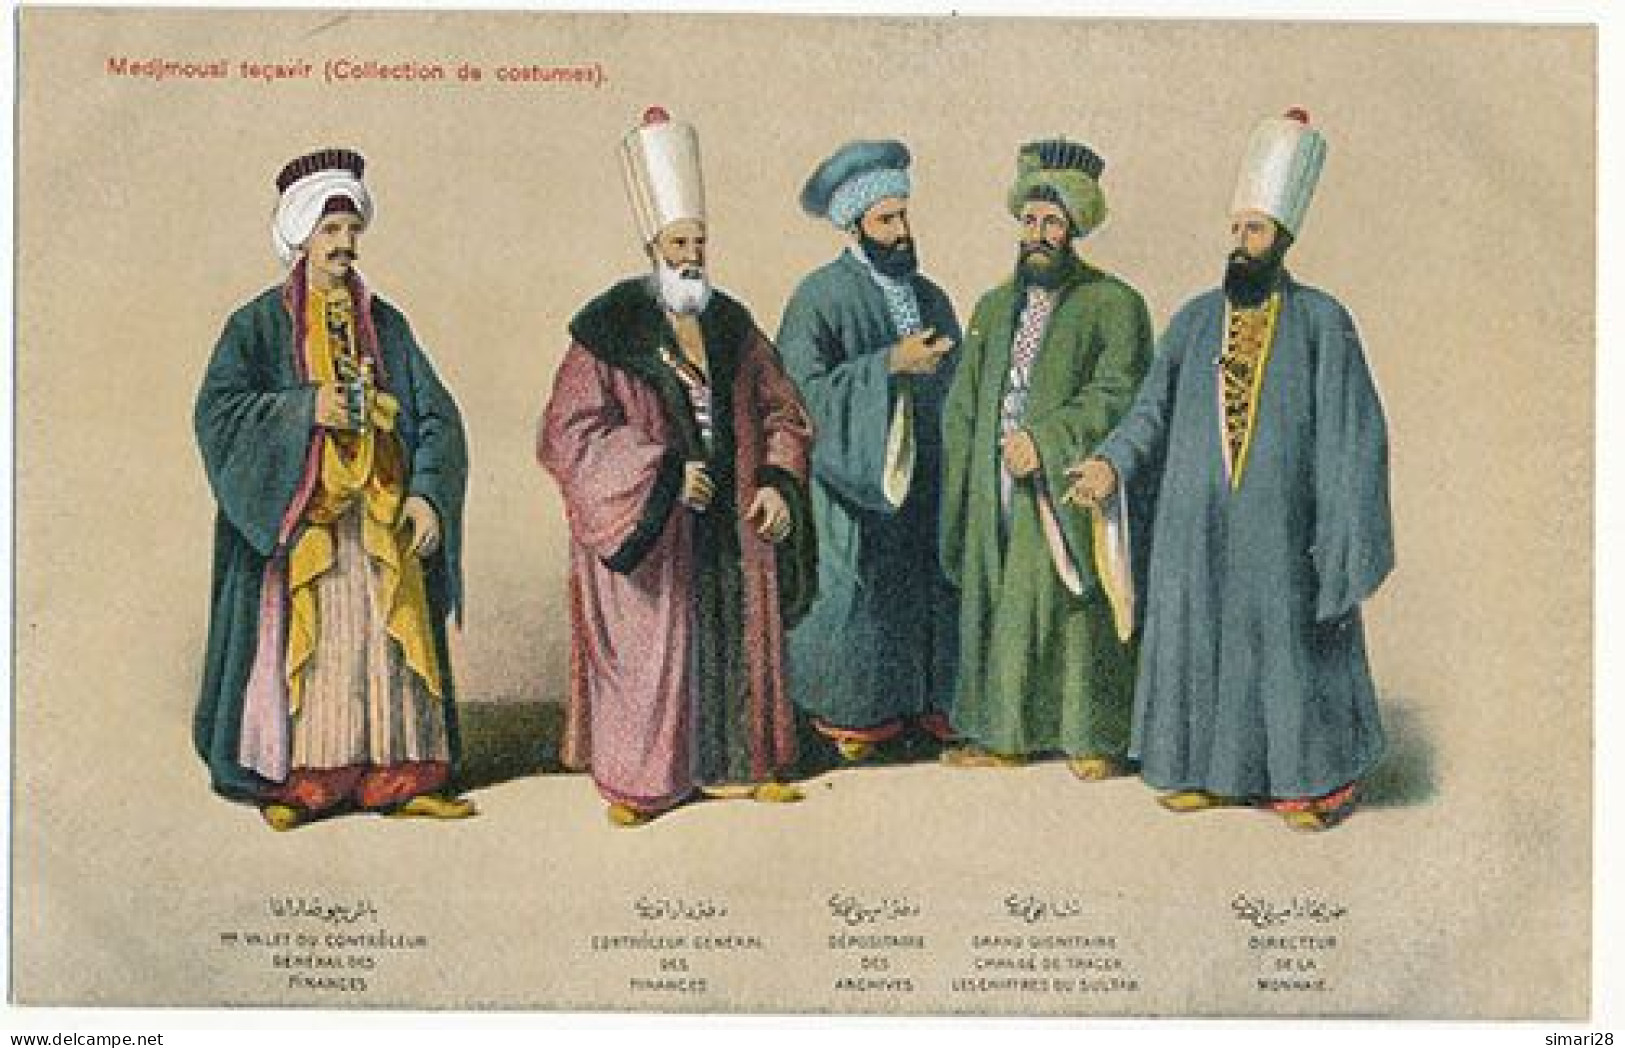 COLLECTION DE COSTUMES - N° 118 - MEDJOUMOUAL TECAVIR - Turquia